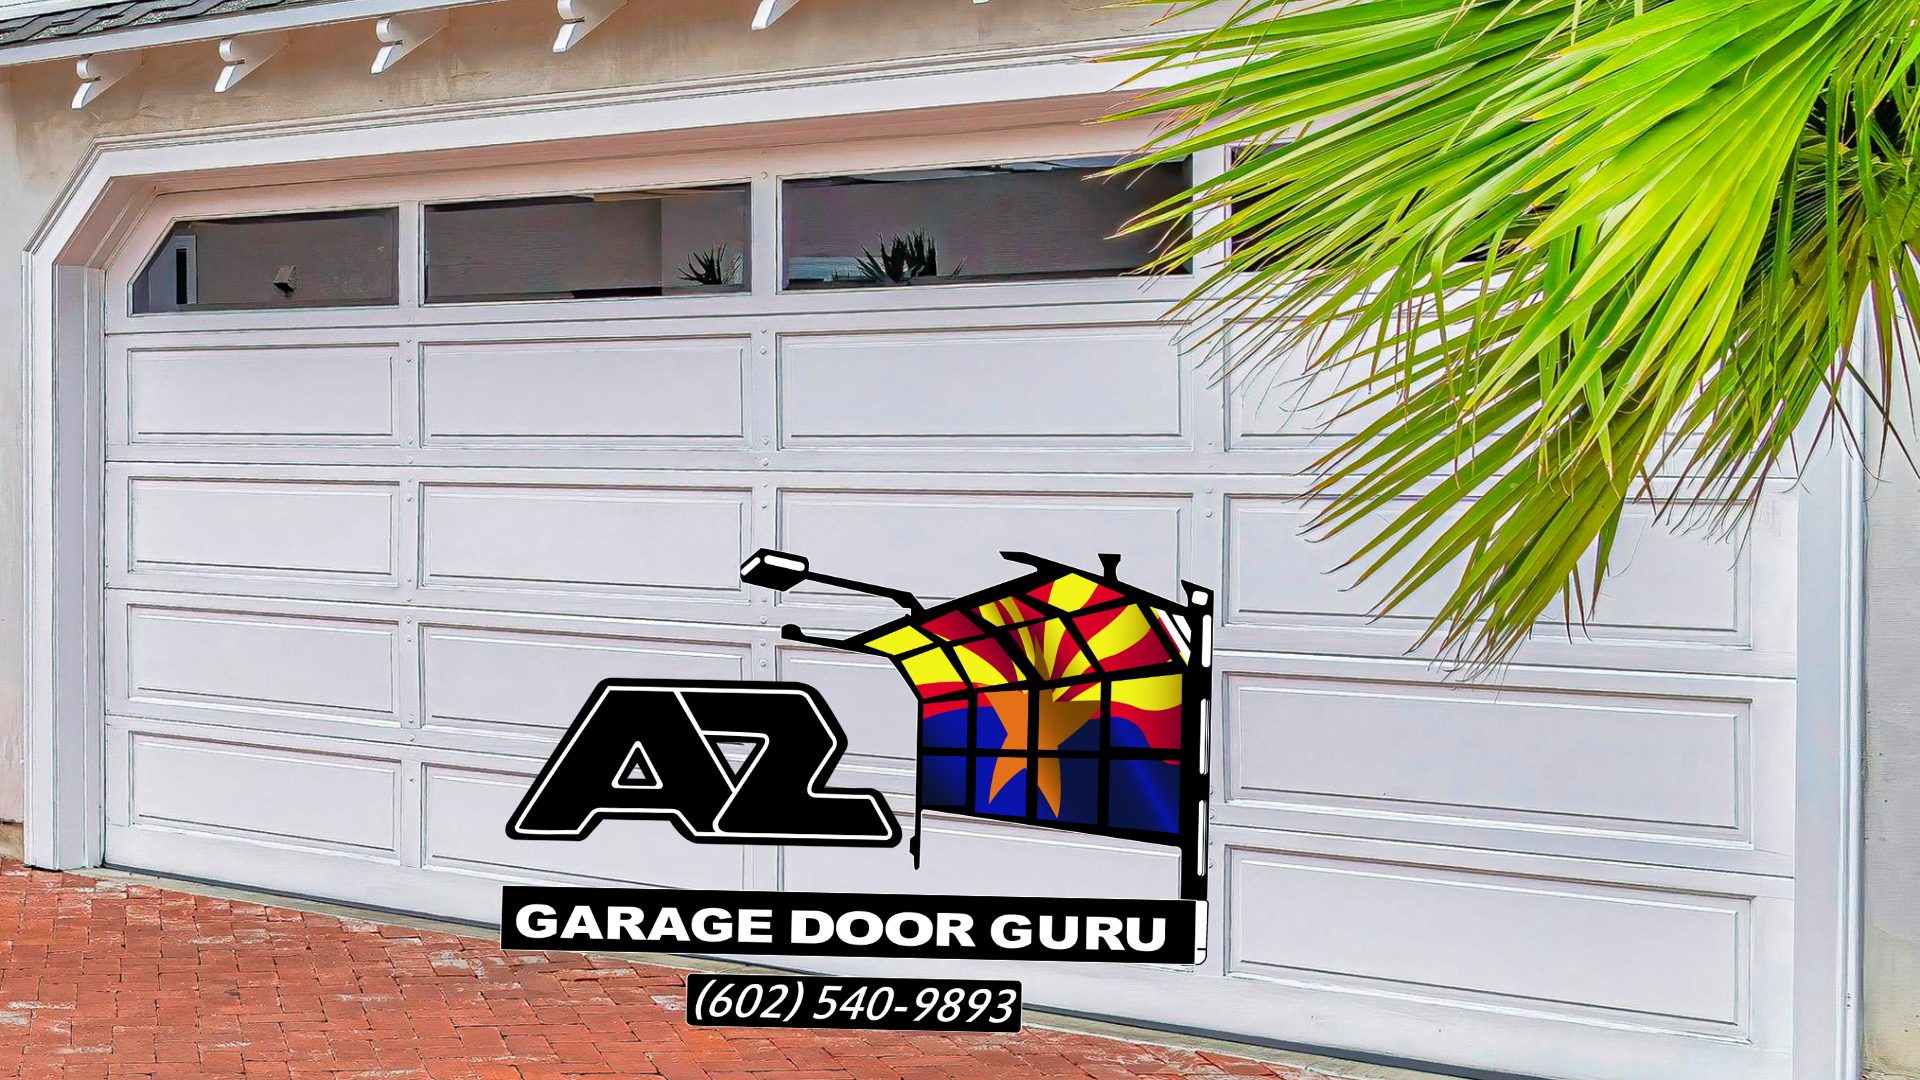 Keep Your Home Safe With Professional Garage Door Repair